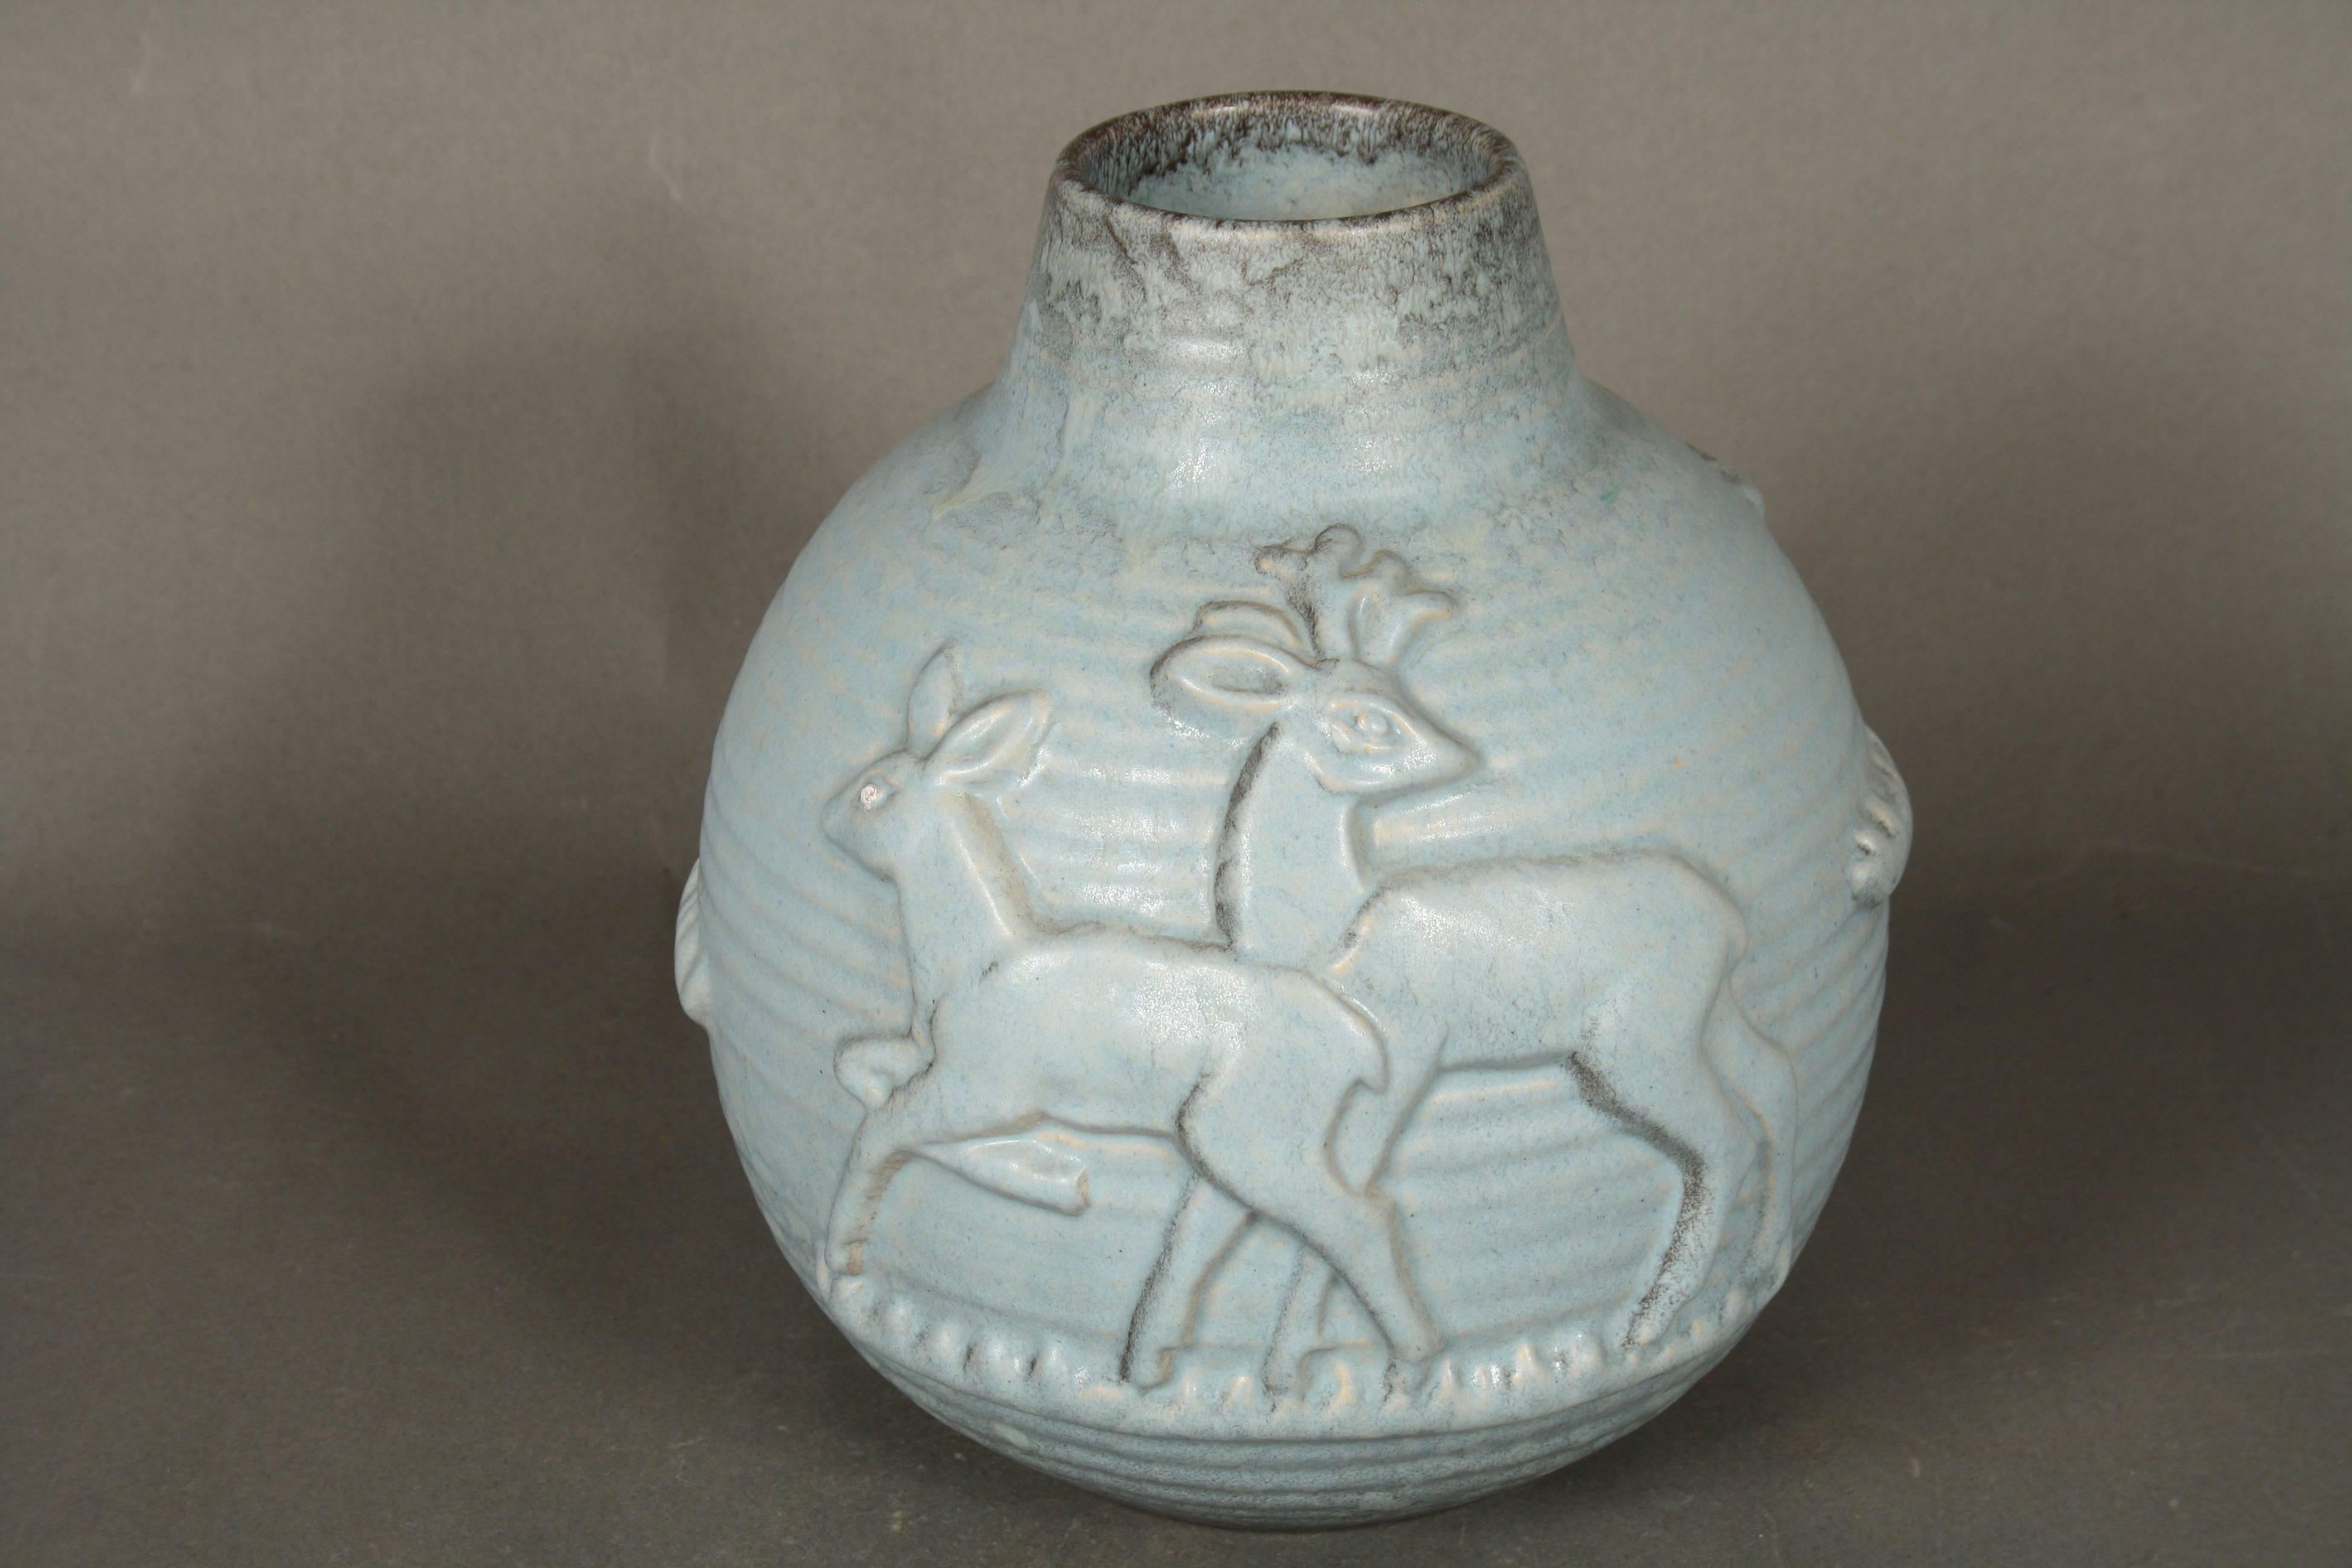 Glazed Michael Andersen Stoneware Vase with Light Blue Glaze, 1930s from Denmark For Sale